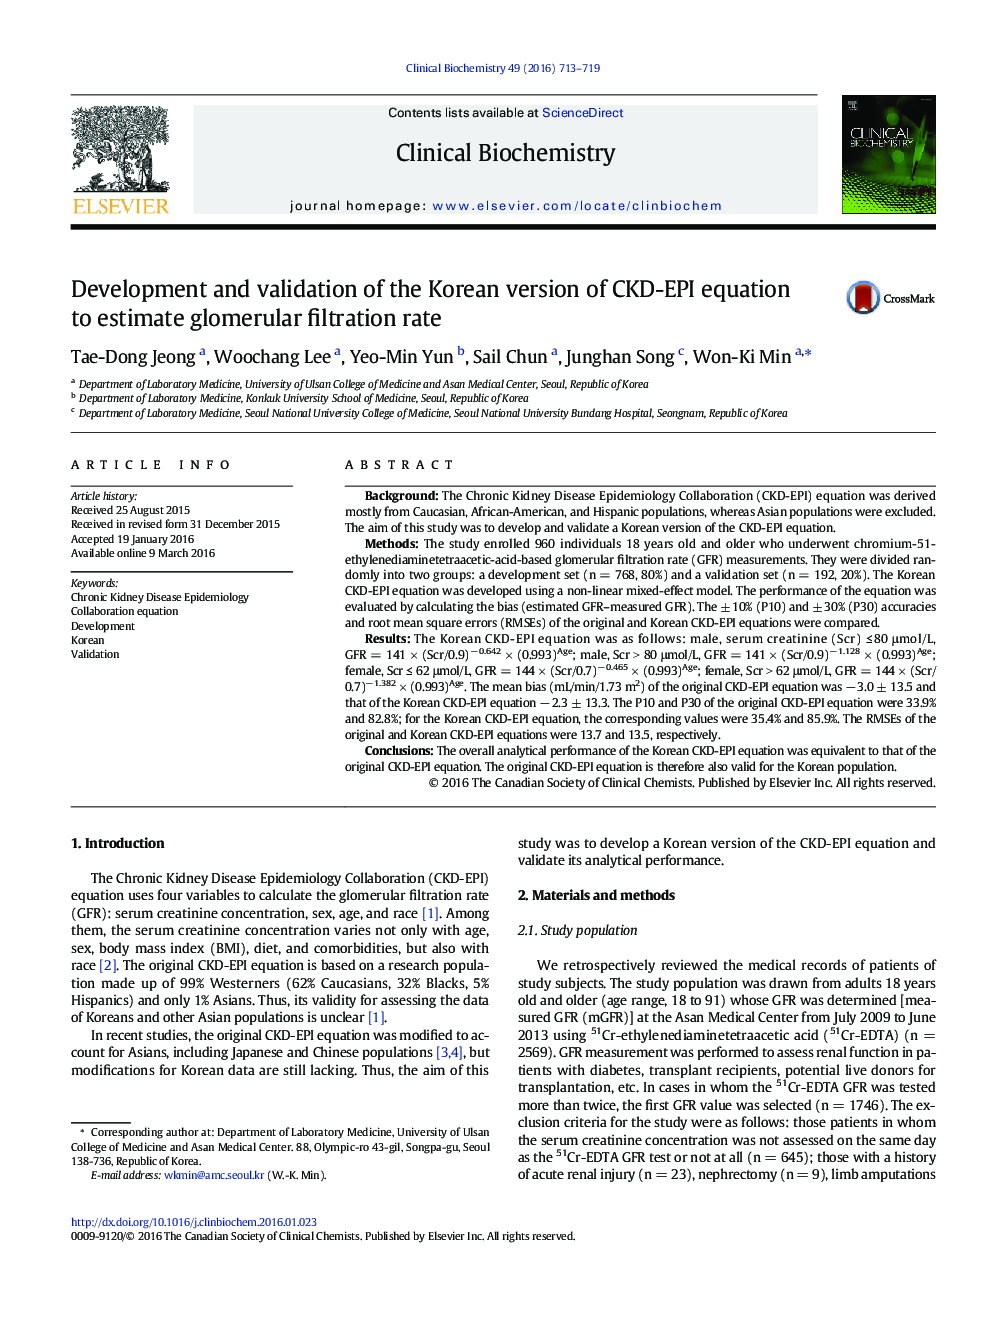 Development and validation of the Korean version of CKD-EPI equation to estimate glomerular filtration rate